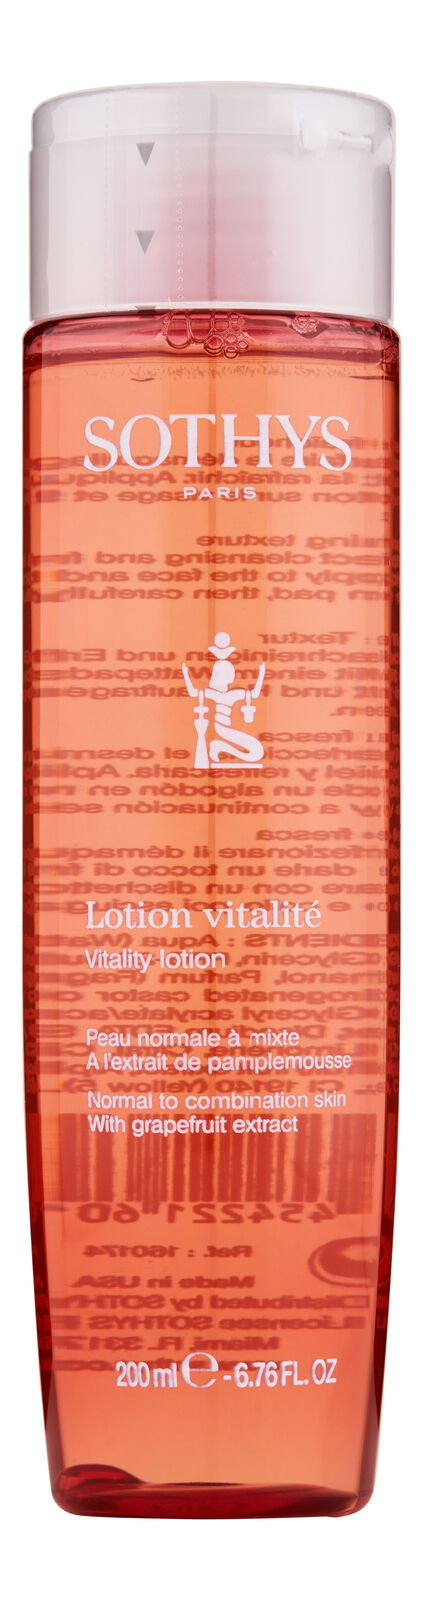 Sothys Vitality Lotion 6.7 fl oz. Facial Toner